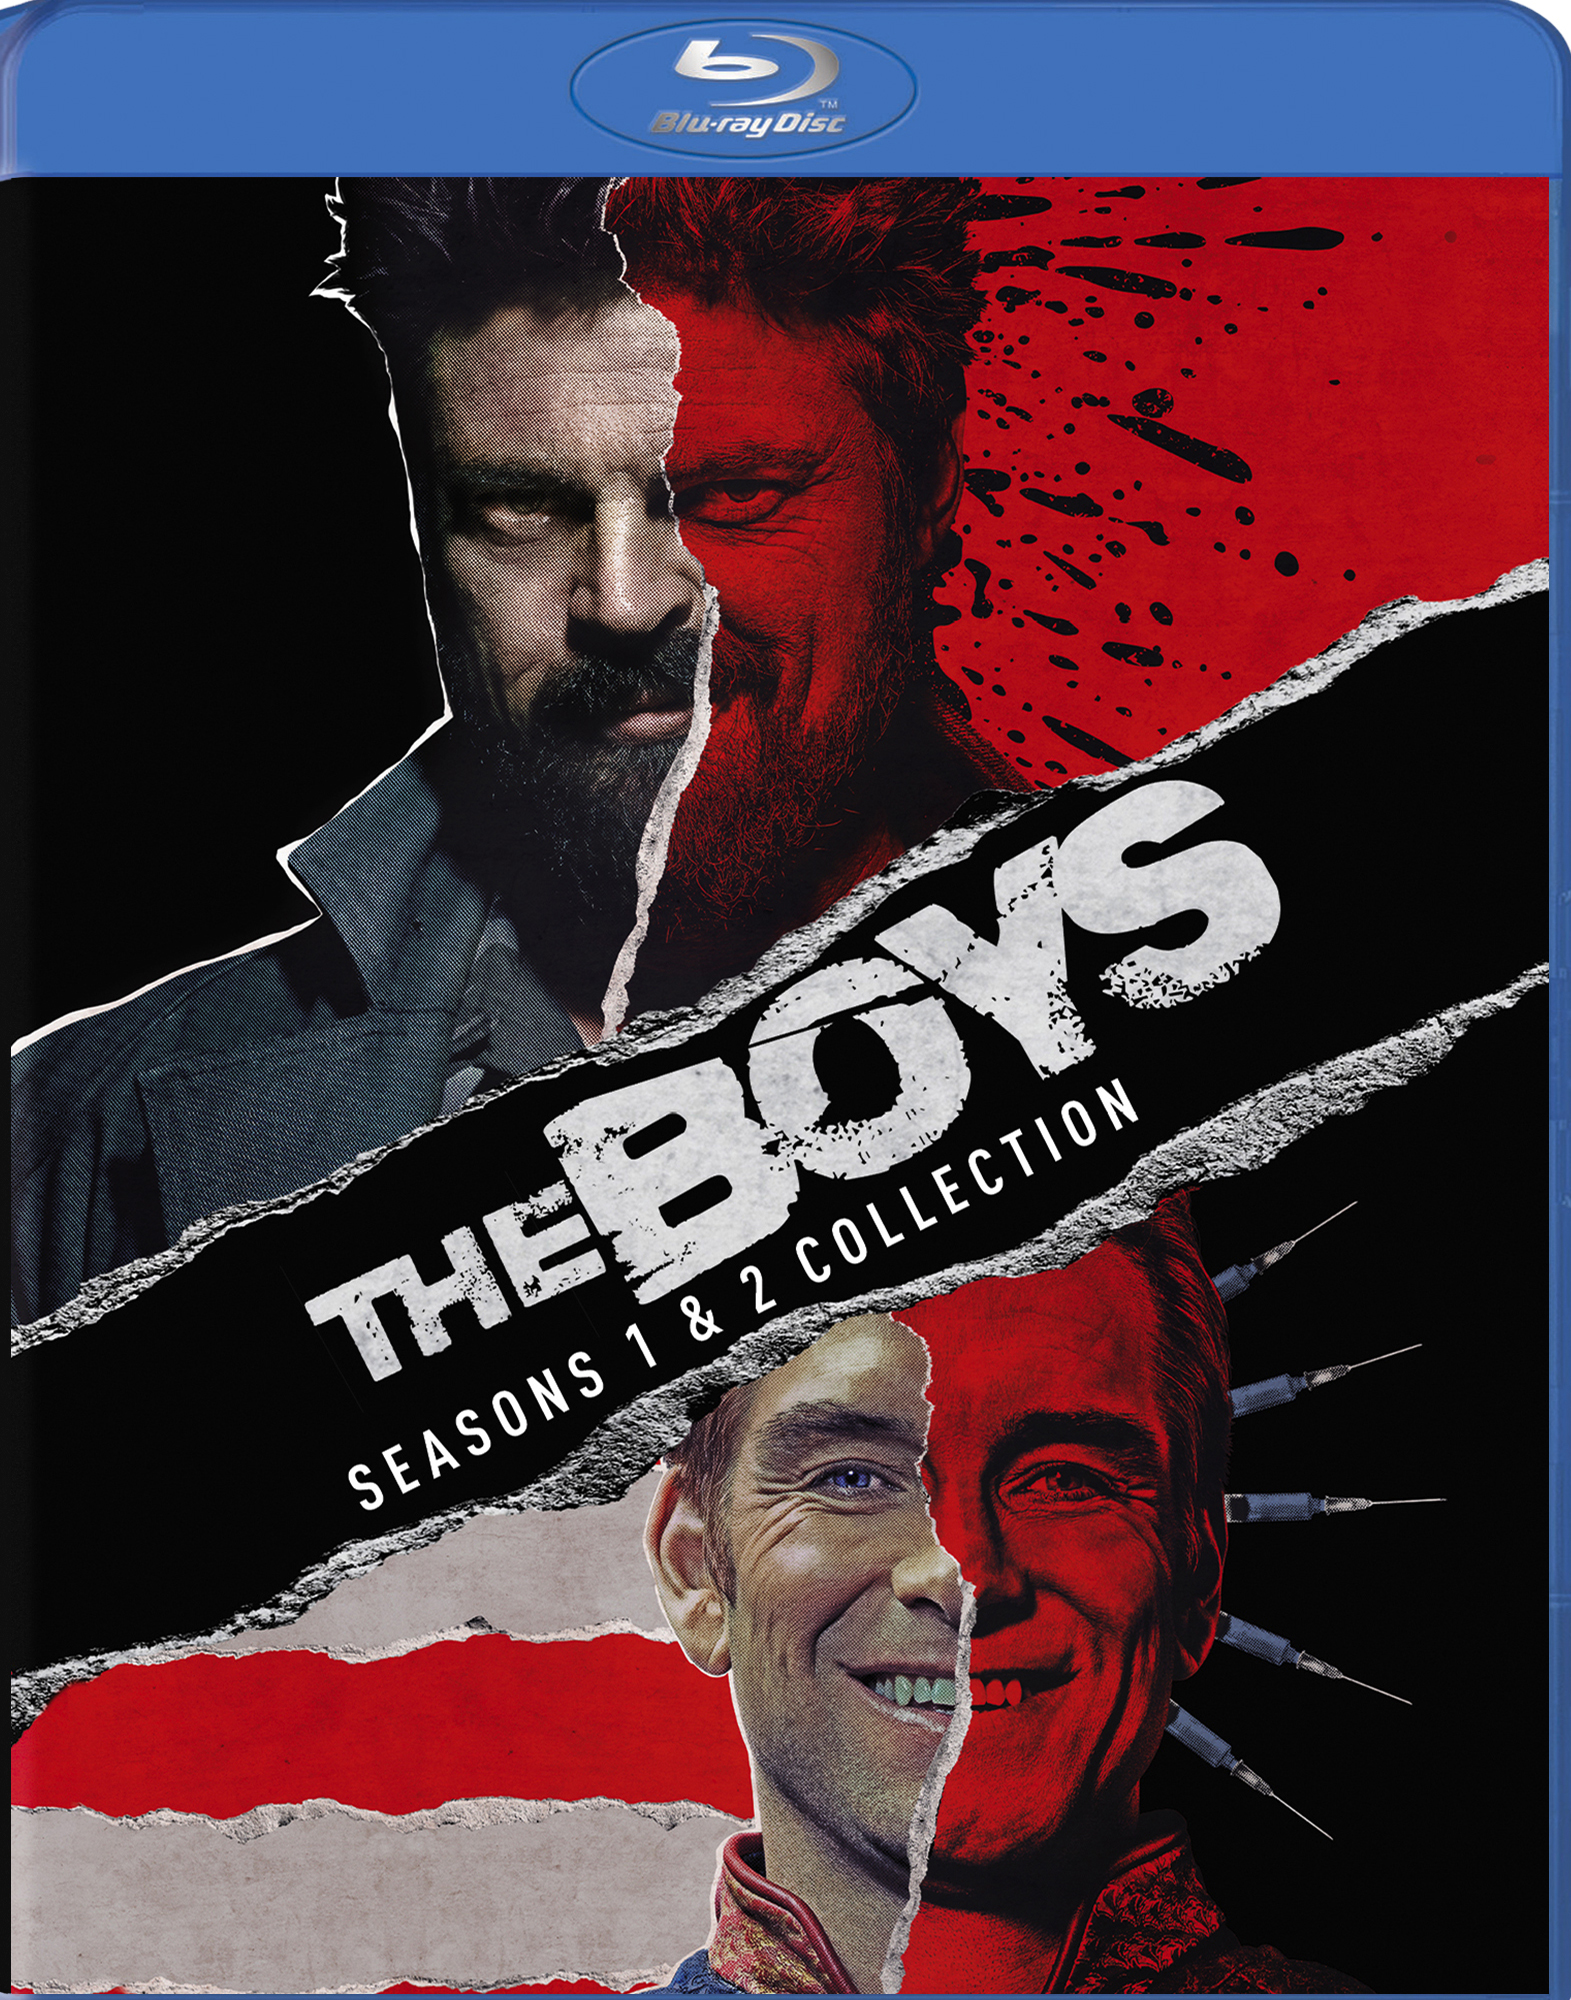 The Boys - Seasons 1 & 2 Collection (Blu-ray)